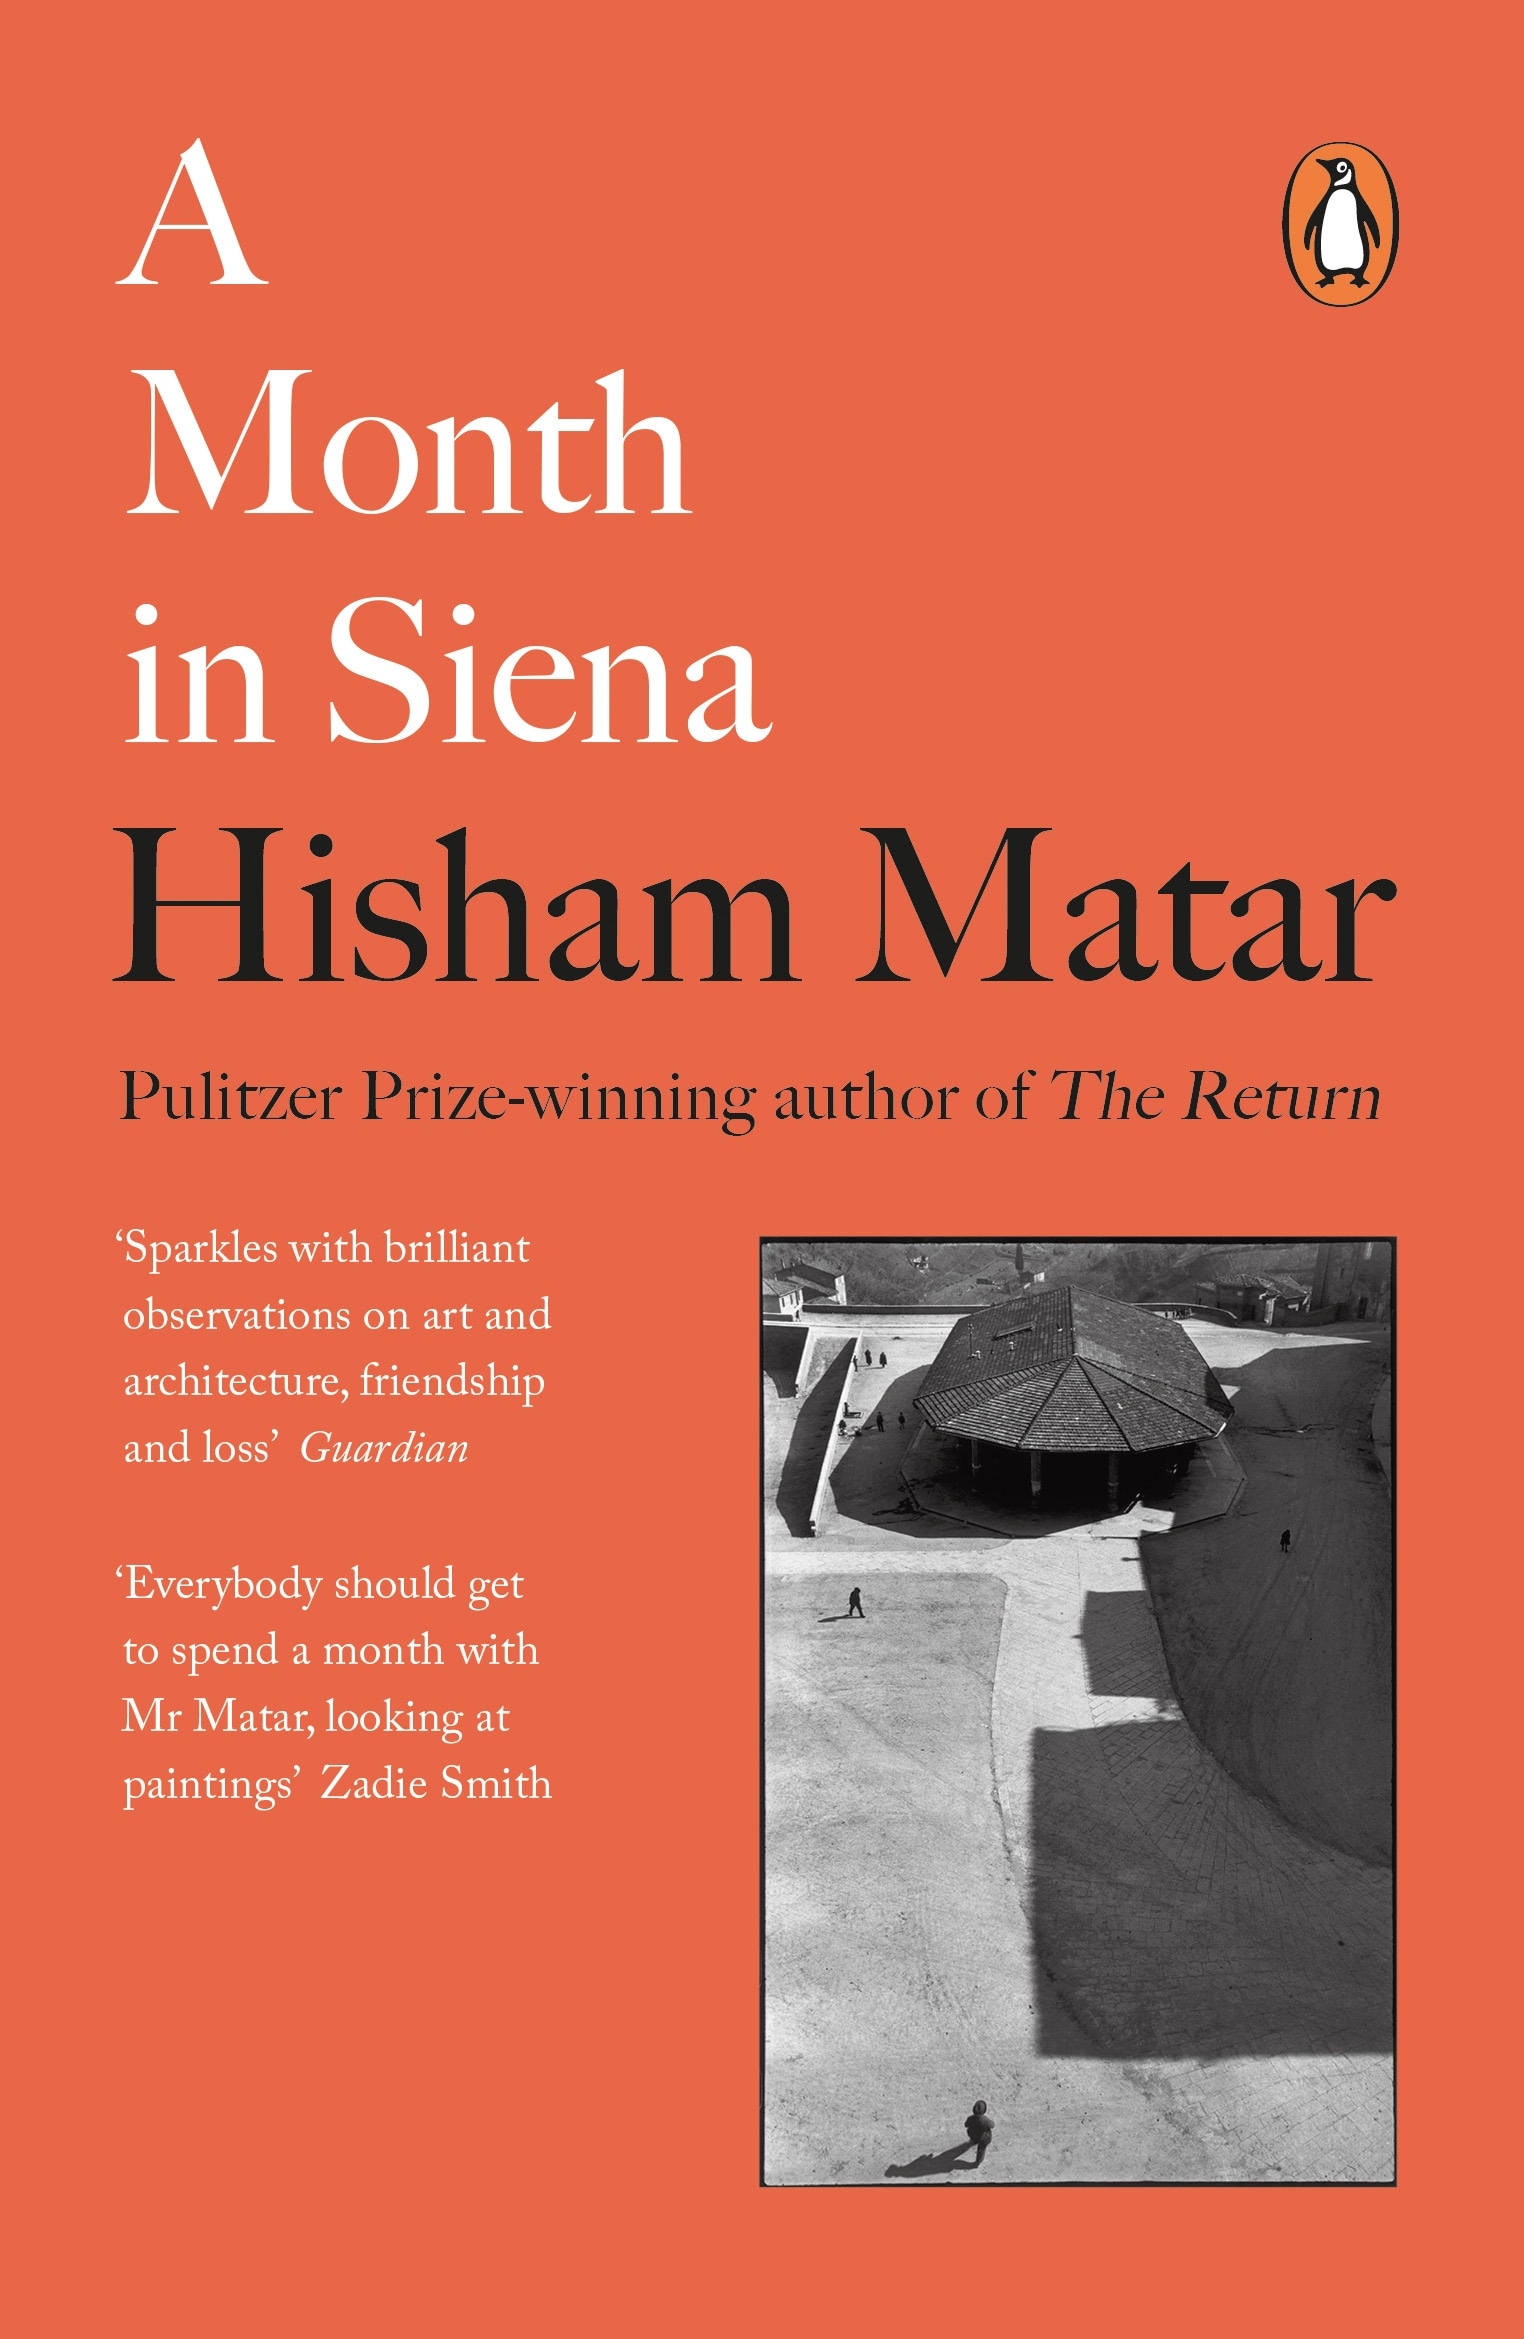 Book “A Month in Siena” by Hisham Matar — August 6, 2020